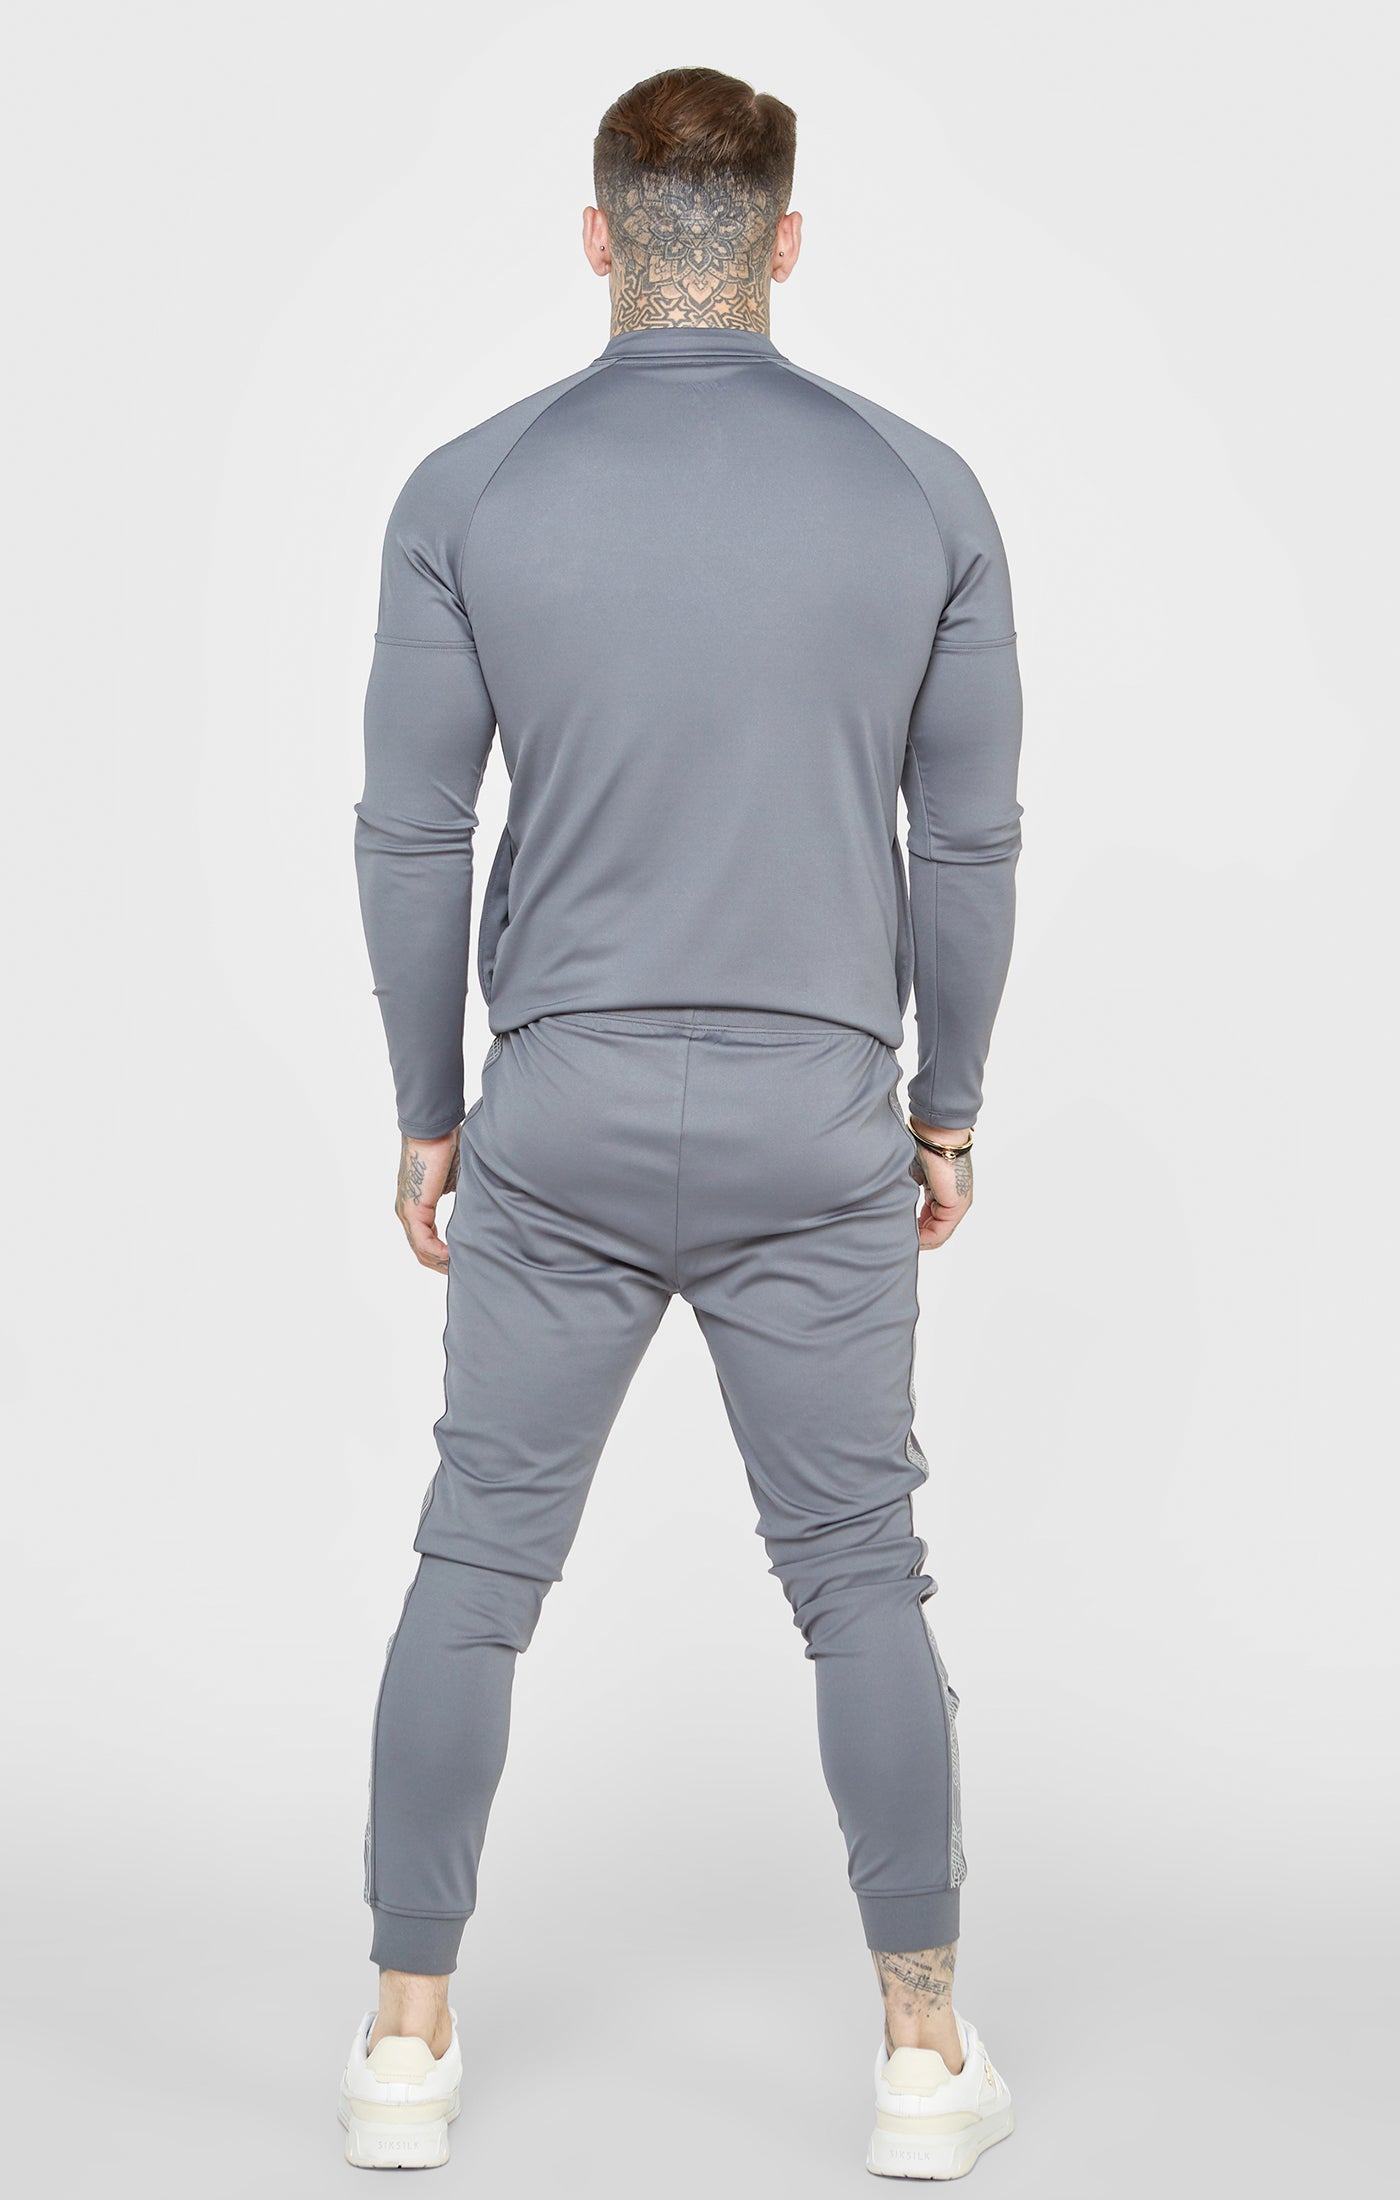 SikSilk Men's Grey Sports Cuffed Pant | SikSilk UK